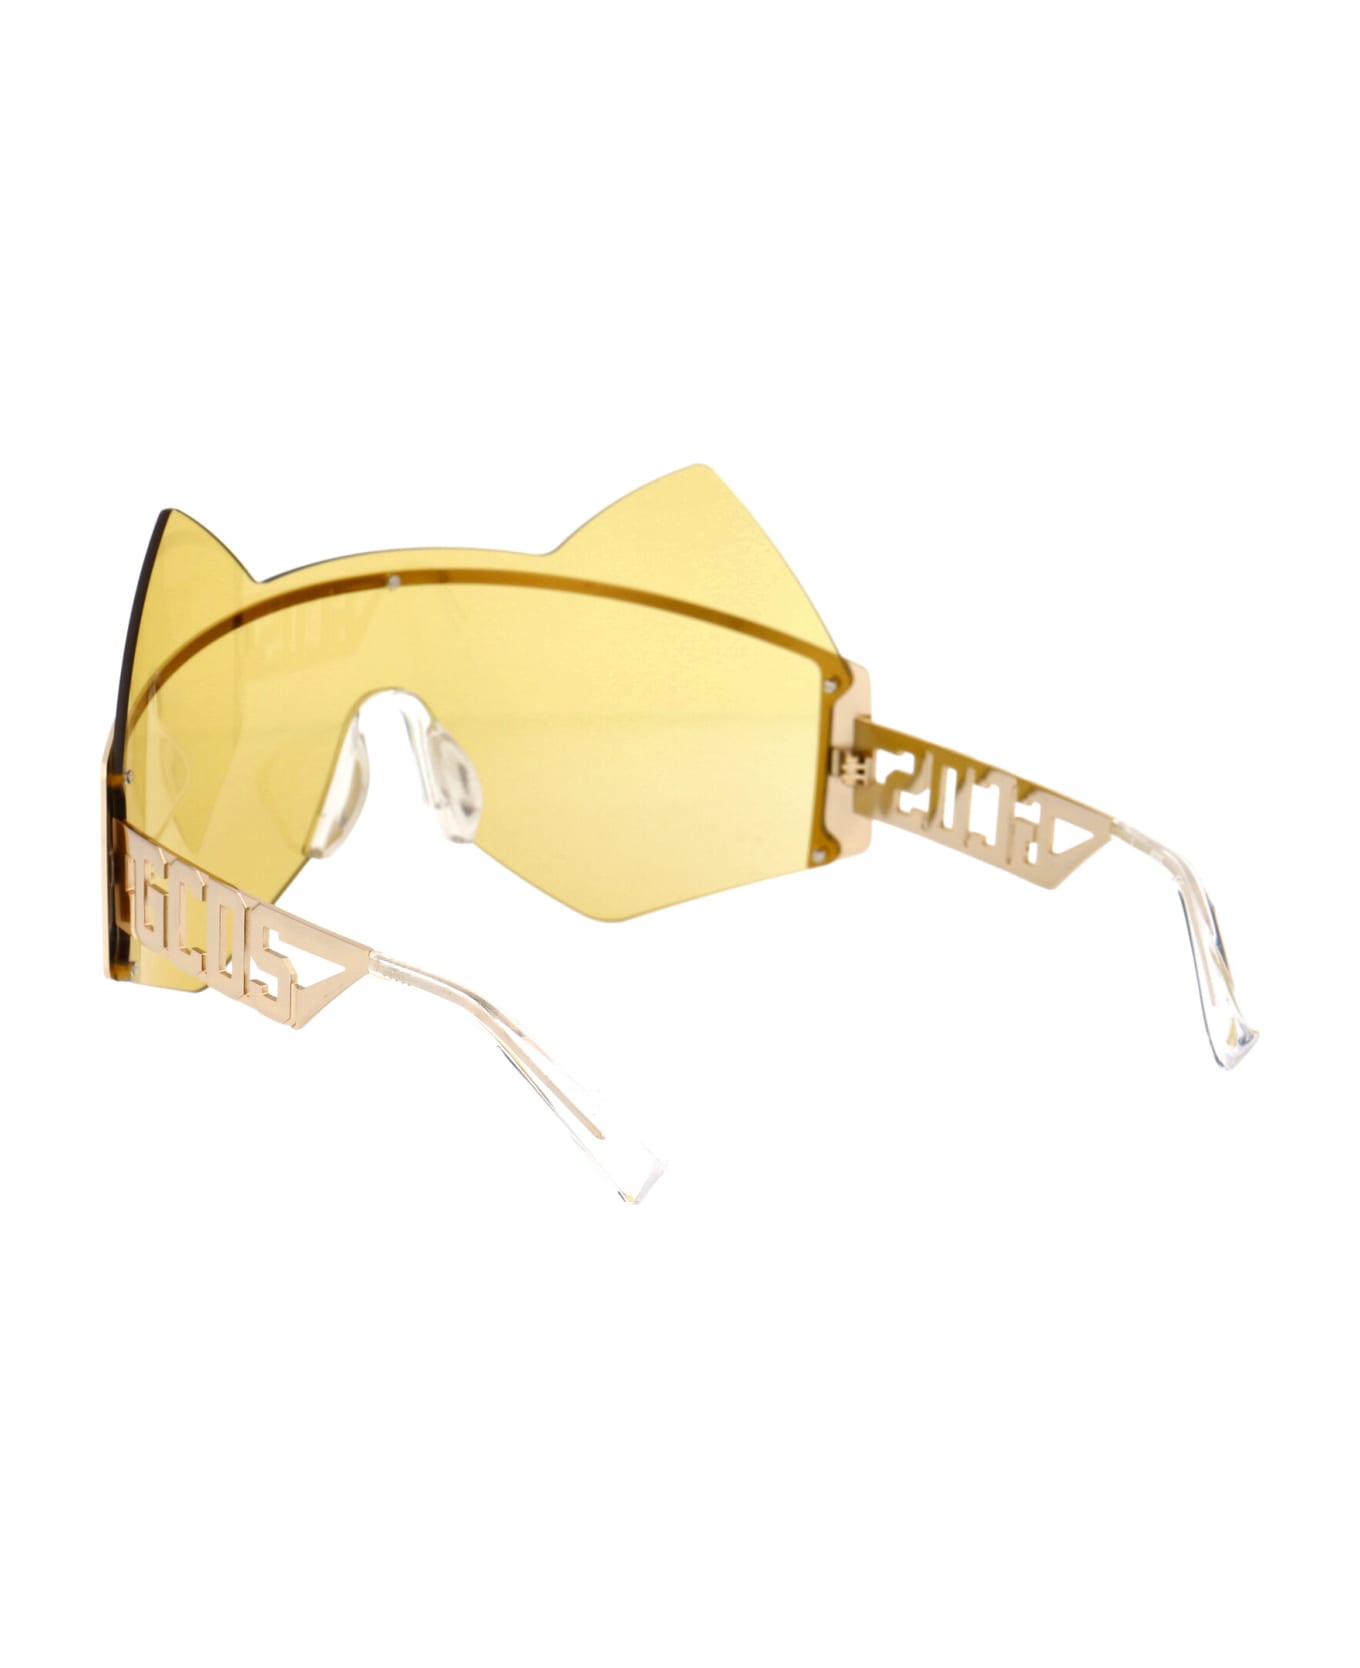 GCDS Gd0002 Sunglasses - 32F YELLOW サングラス